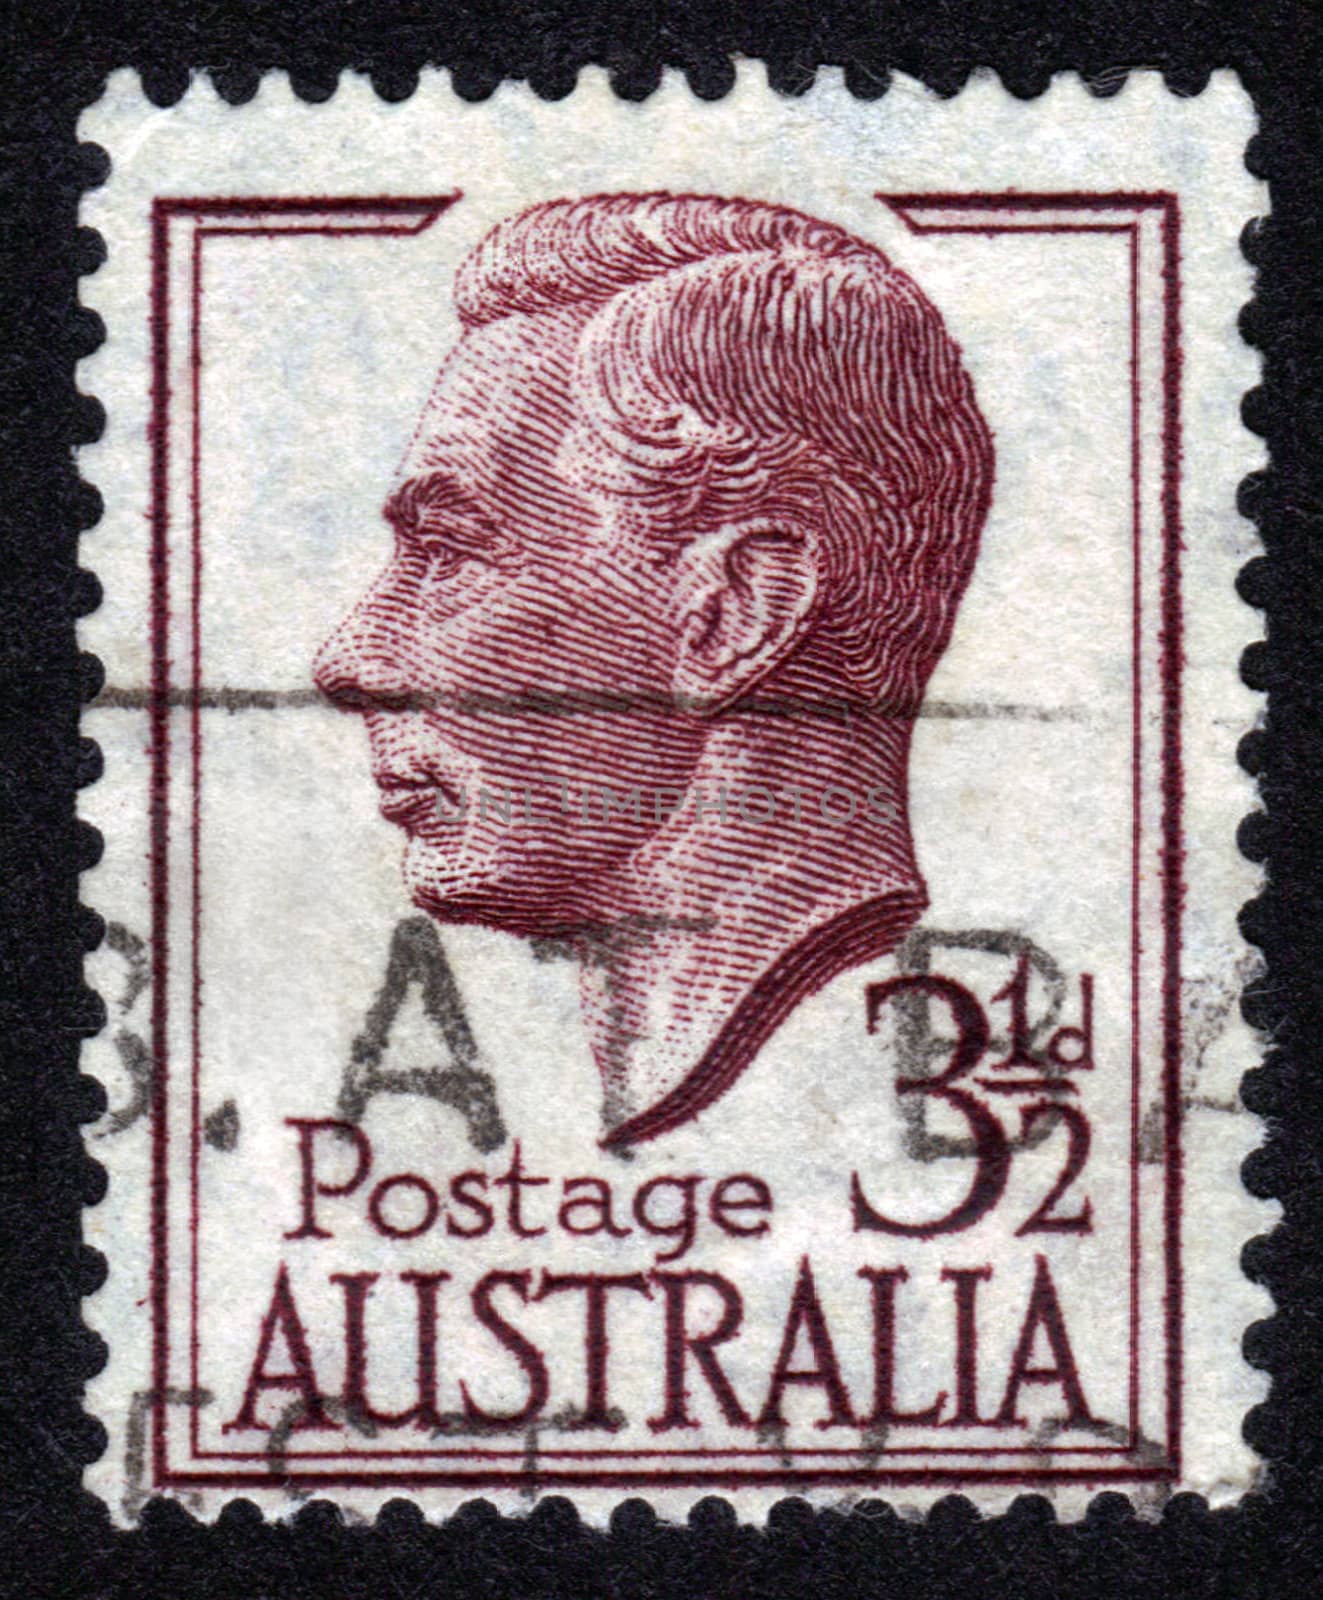 AUSTRALIA - CIRCA 1951: A stamp printed in AUSTRALIA showing a portrait of King George VI, circa 1951